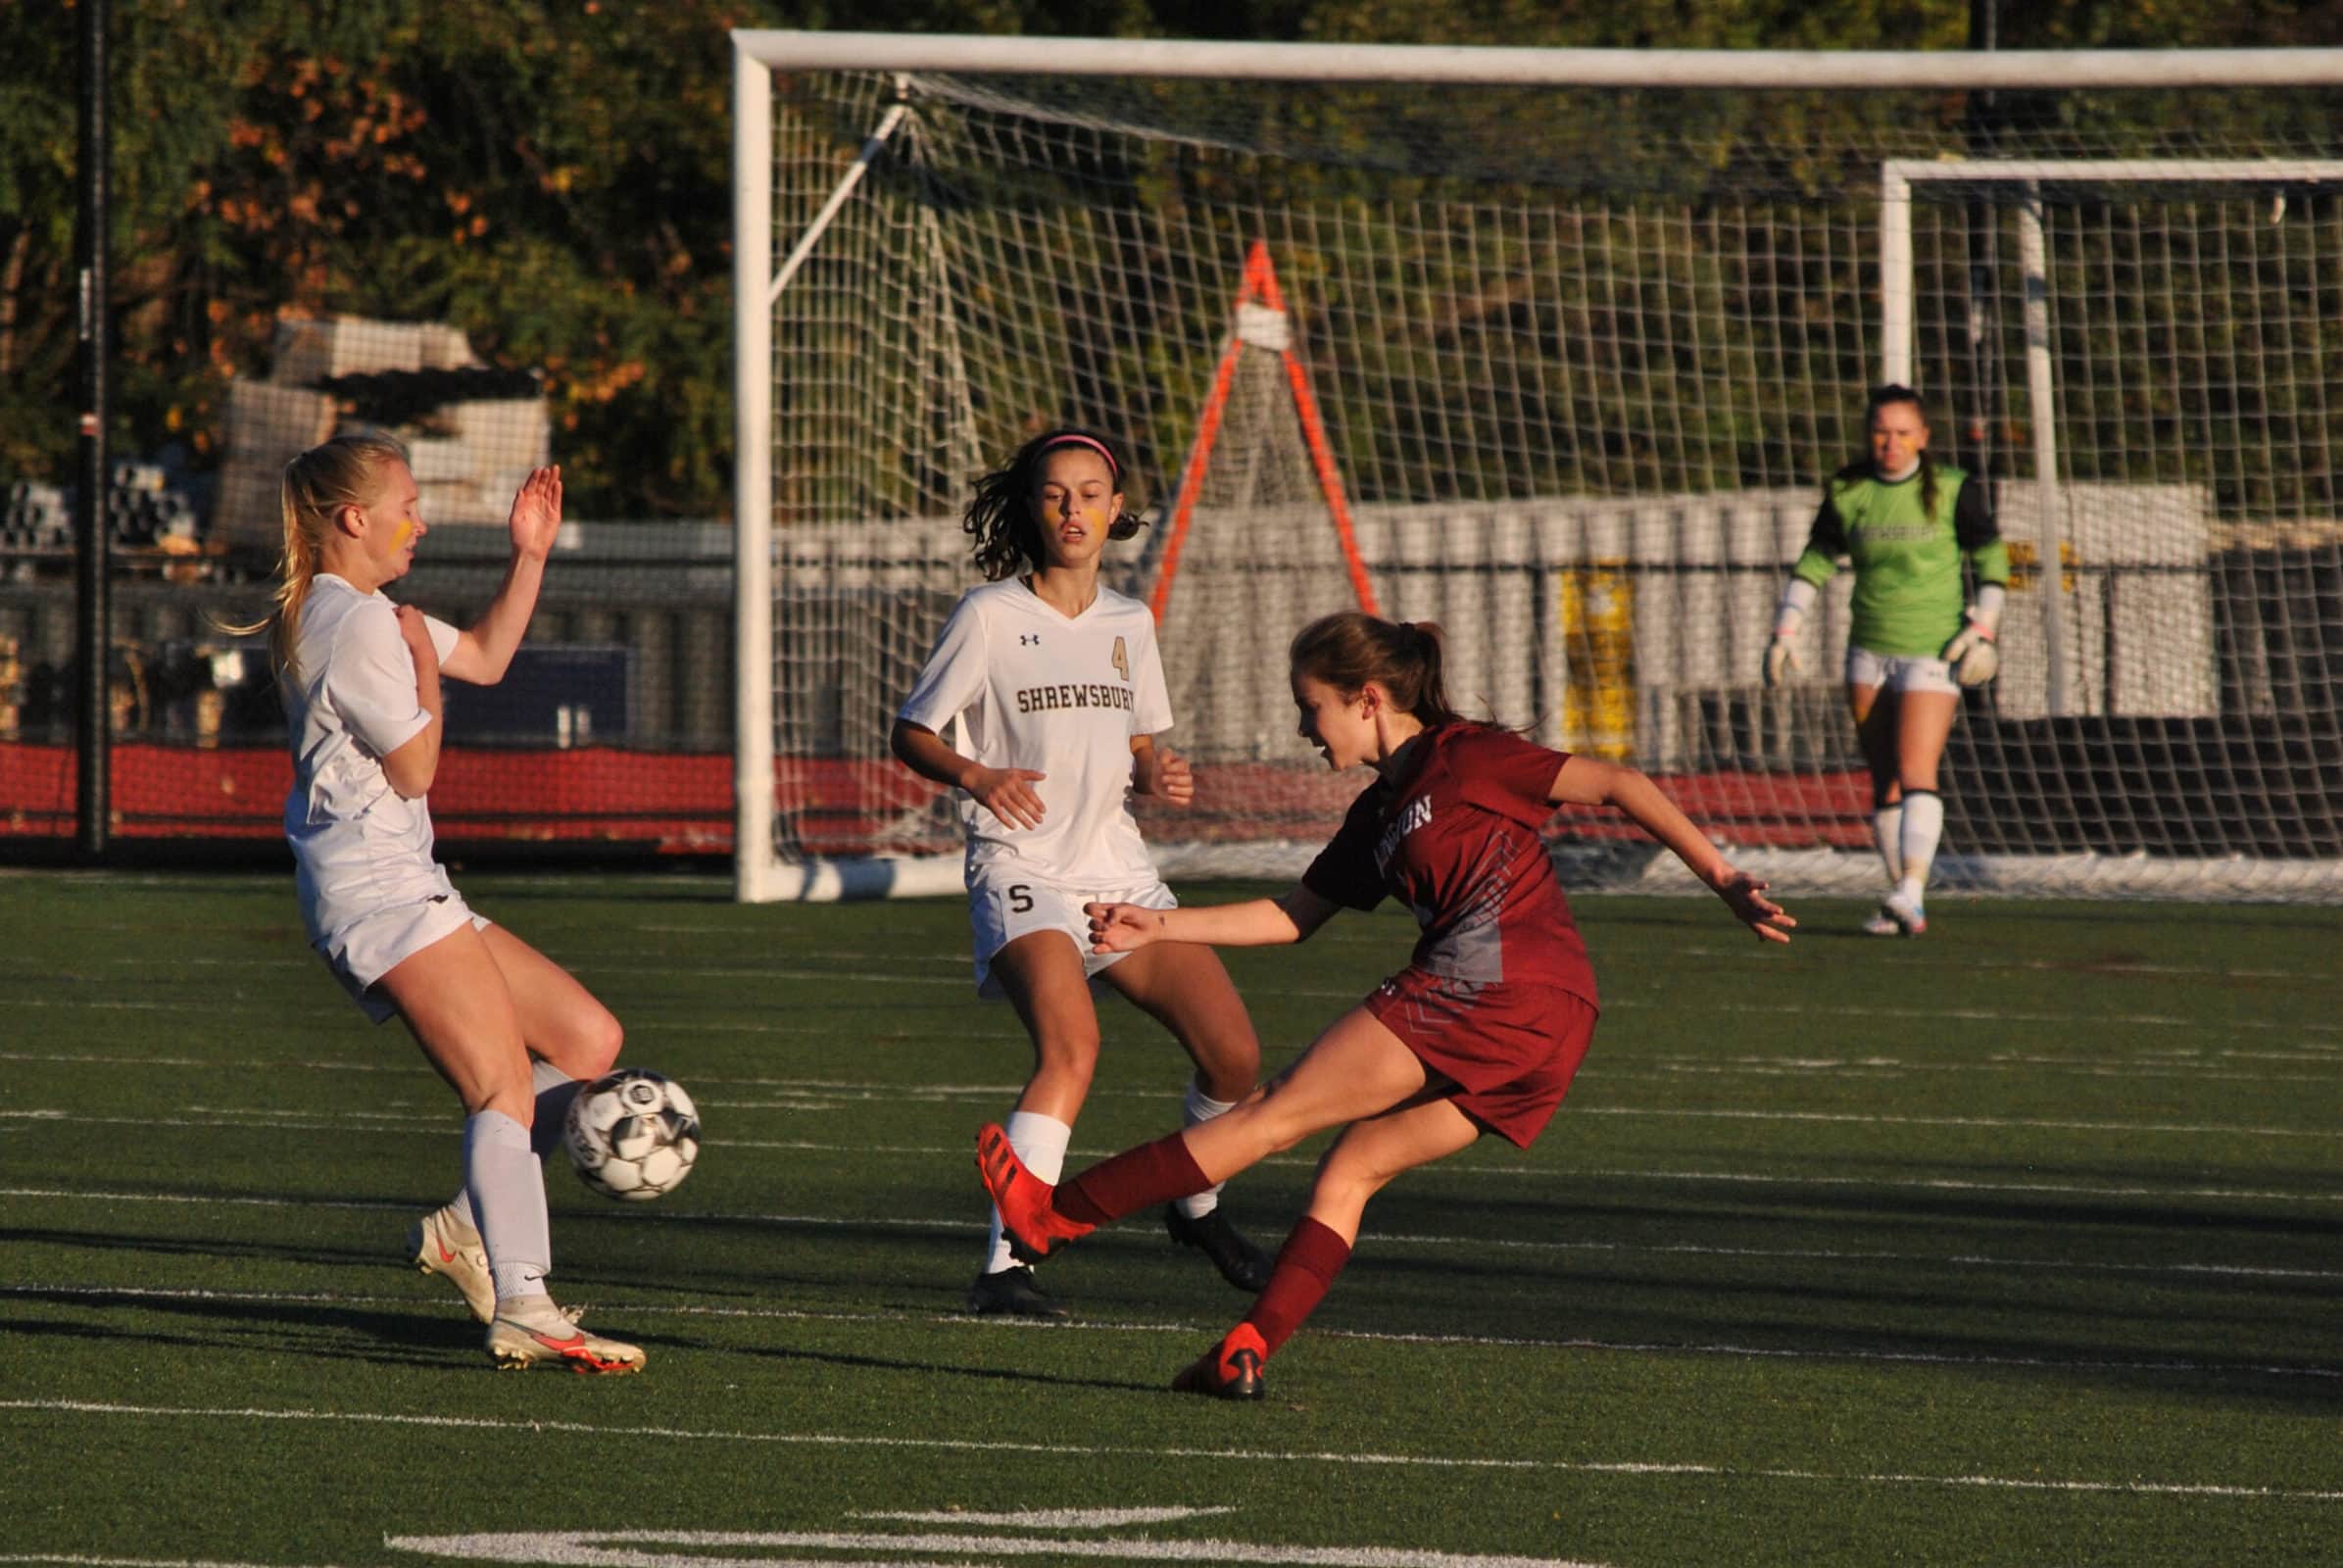 Shrewsbury girls soccer falls to Arlington in playoff matchup